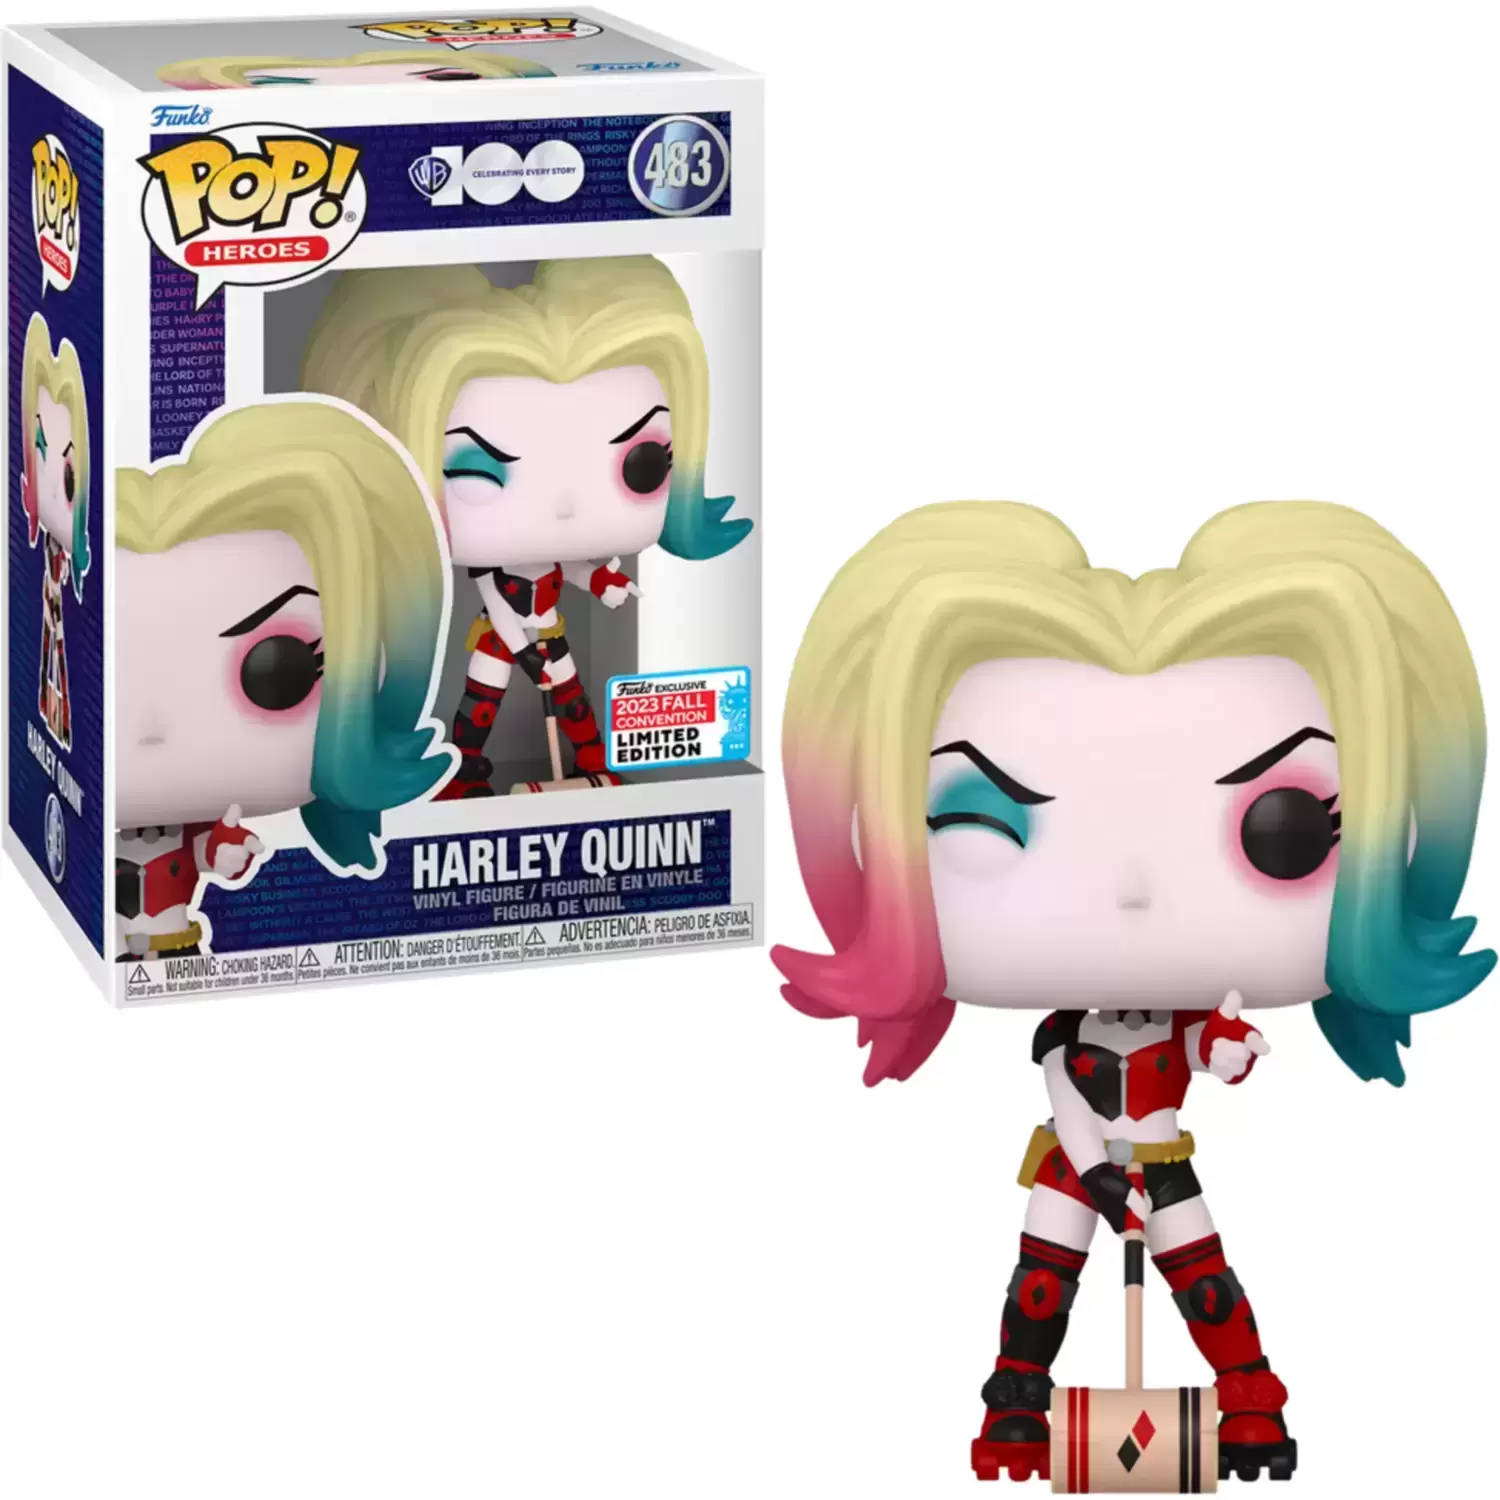 COPY] DC Comics - Harley Quinn with belt - POP! Heroes action figure 483